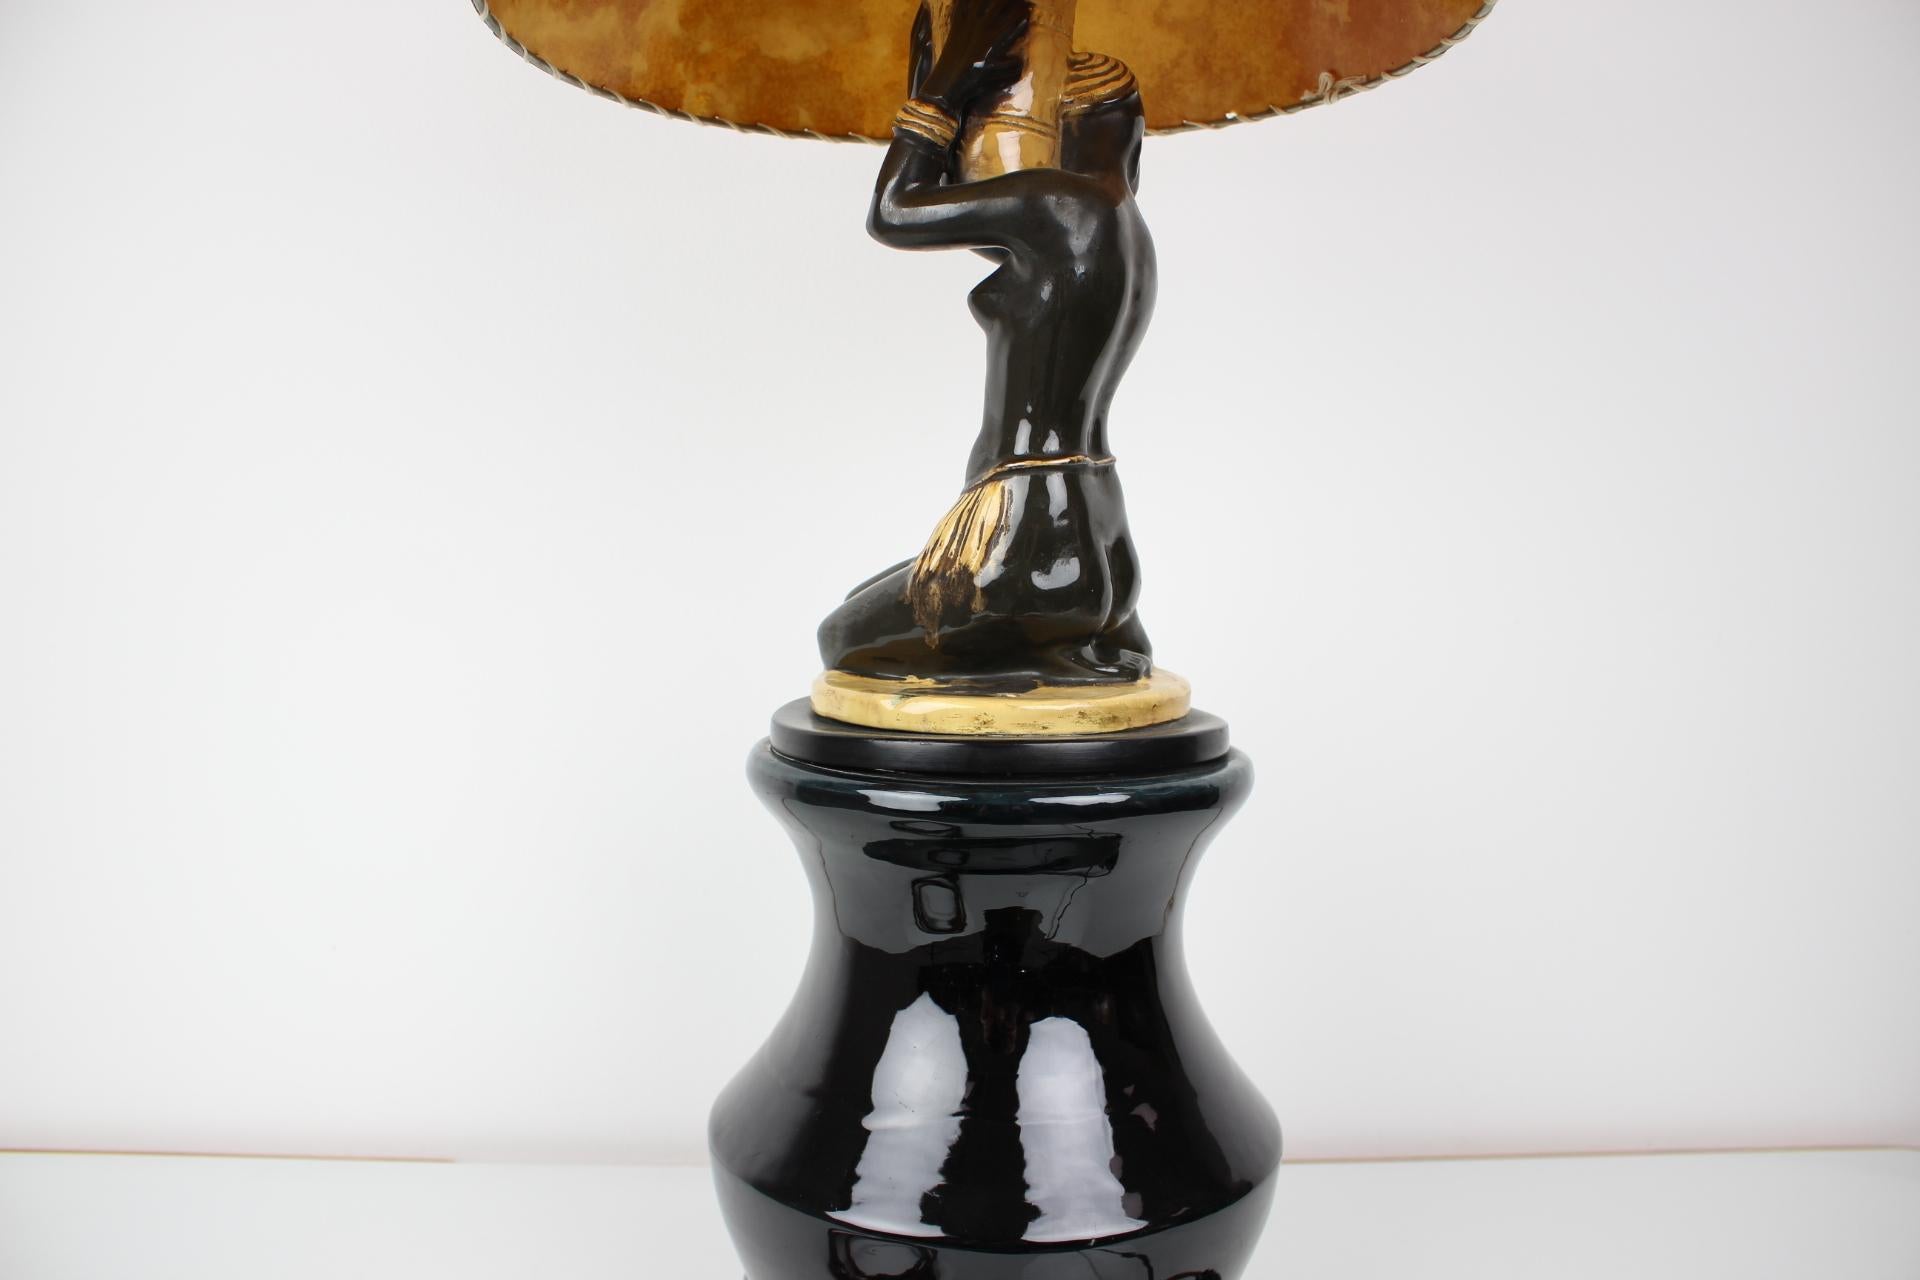 Art Deco Lamp with Loudspeaker, Stilton, 1930s, Czechoslovakia For Sale 1